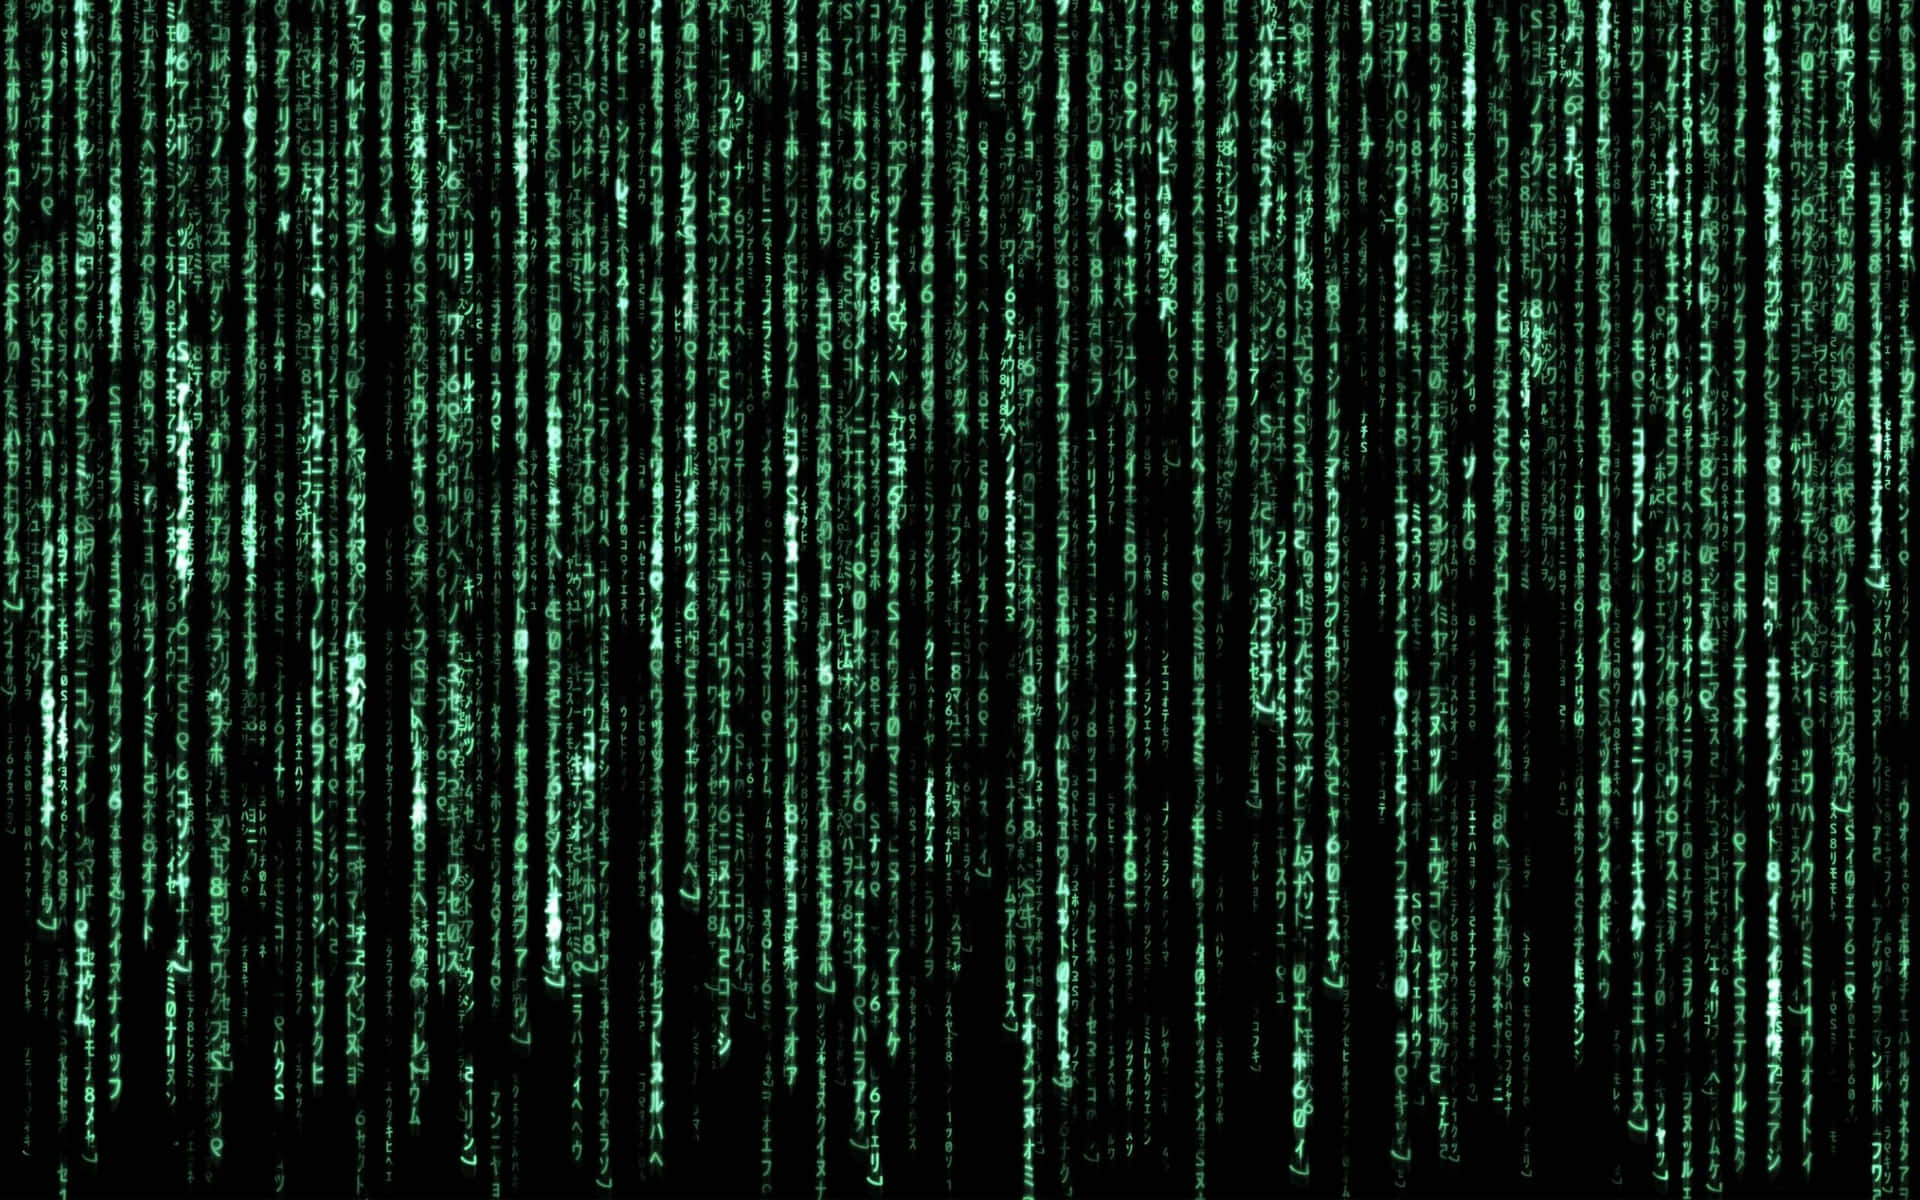 Get the Matrix Look with Iphone Wallpaper